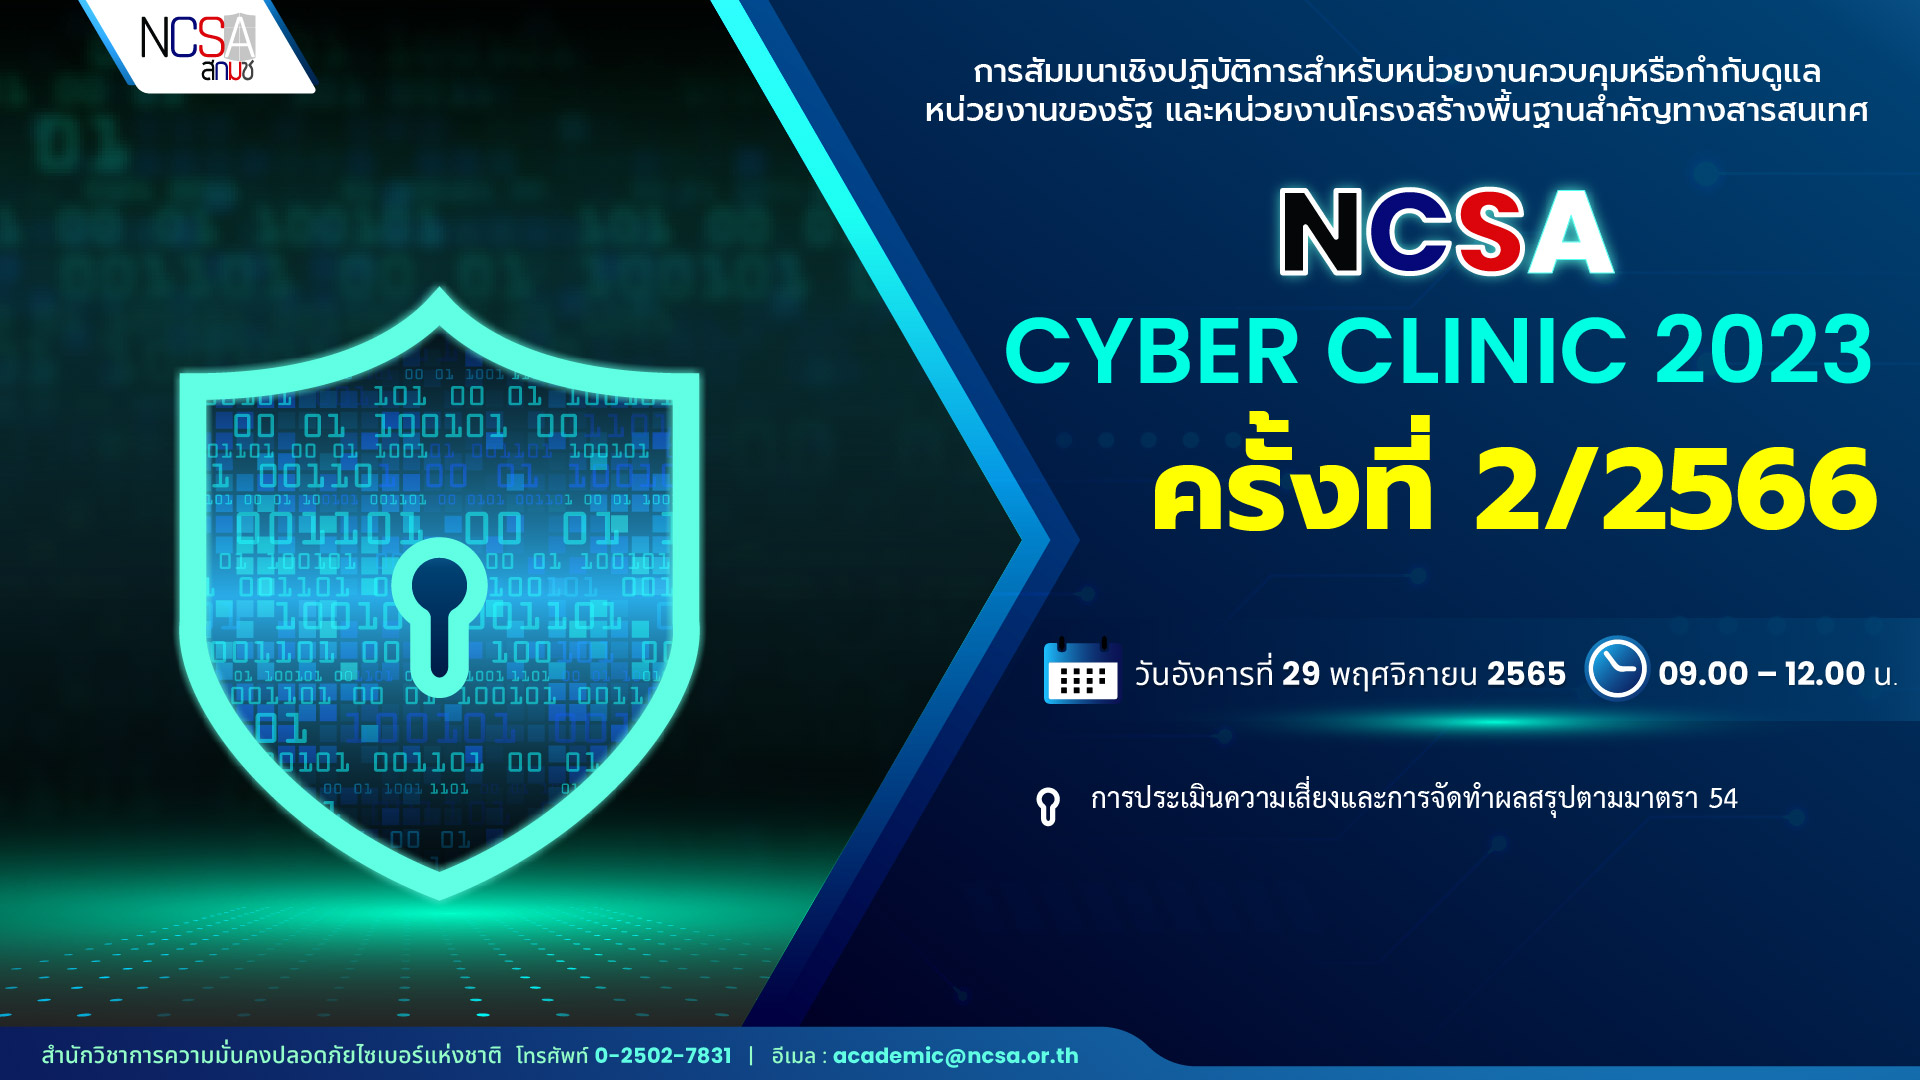 NCSA Cyber Clinic 2023 ครั้งที่ 2/2566